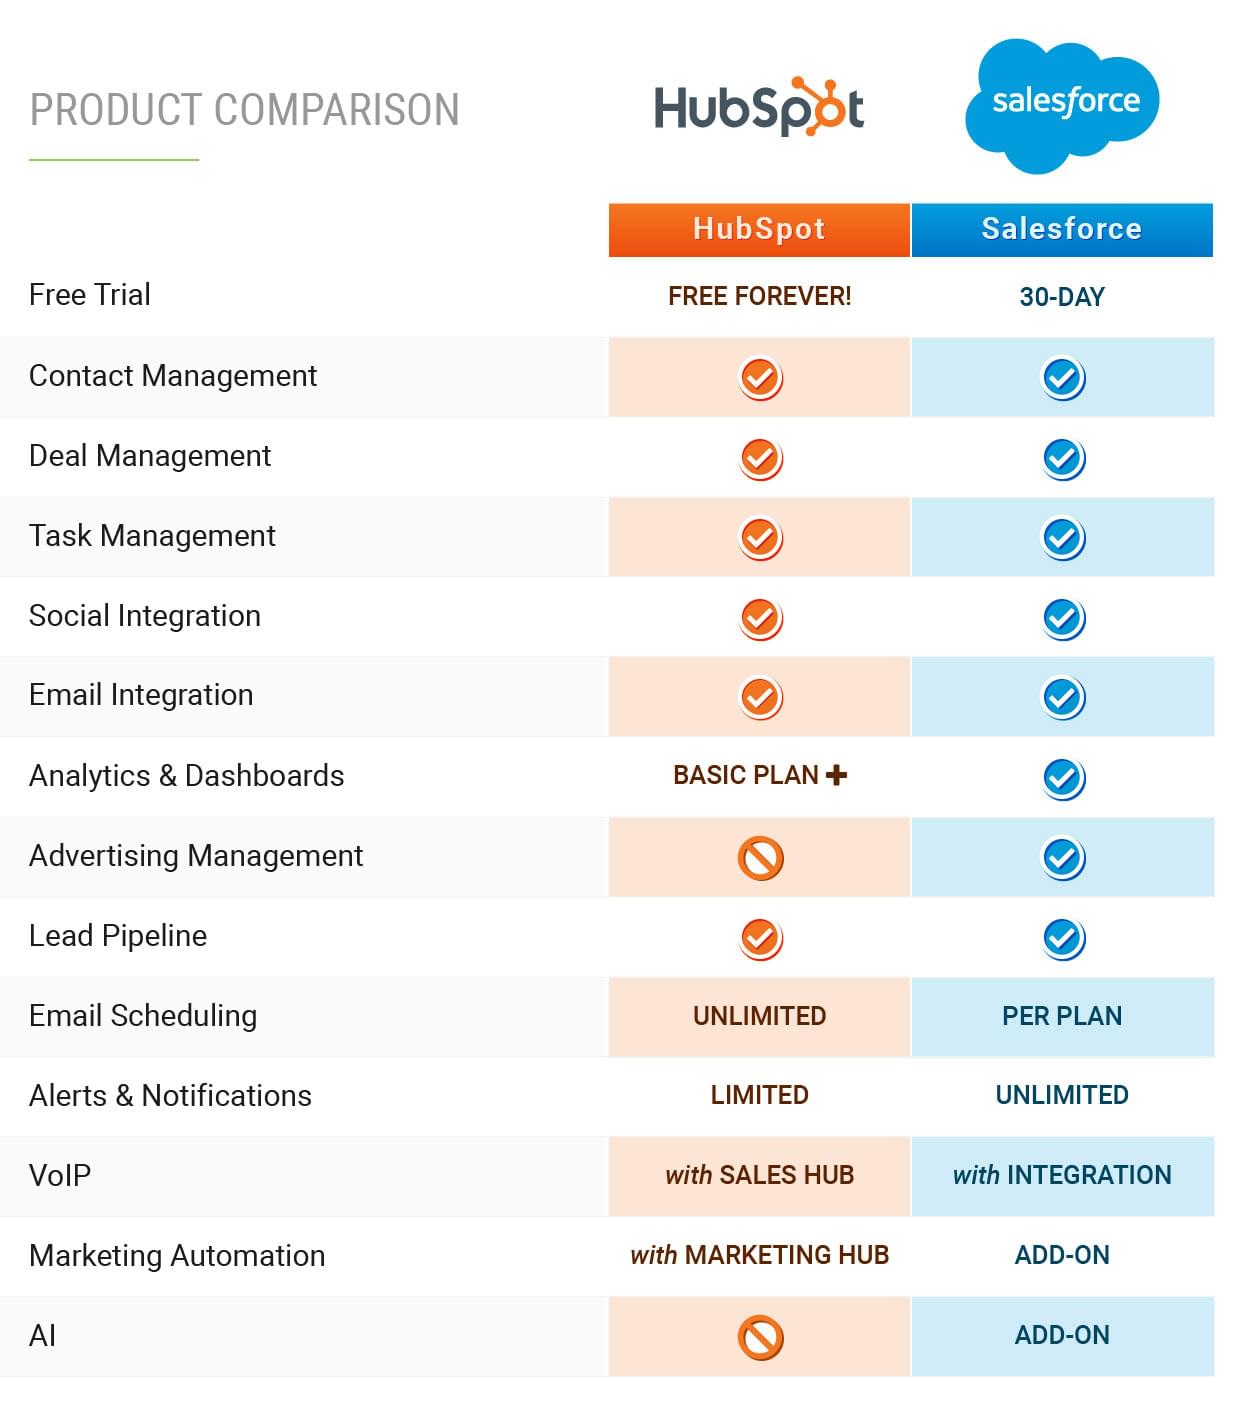 hubspot_vs_salesforce-comparison-chart